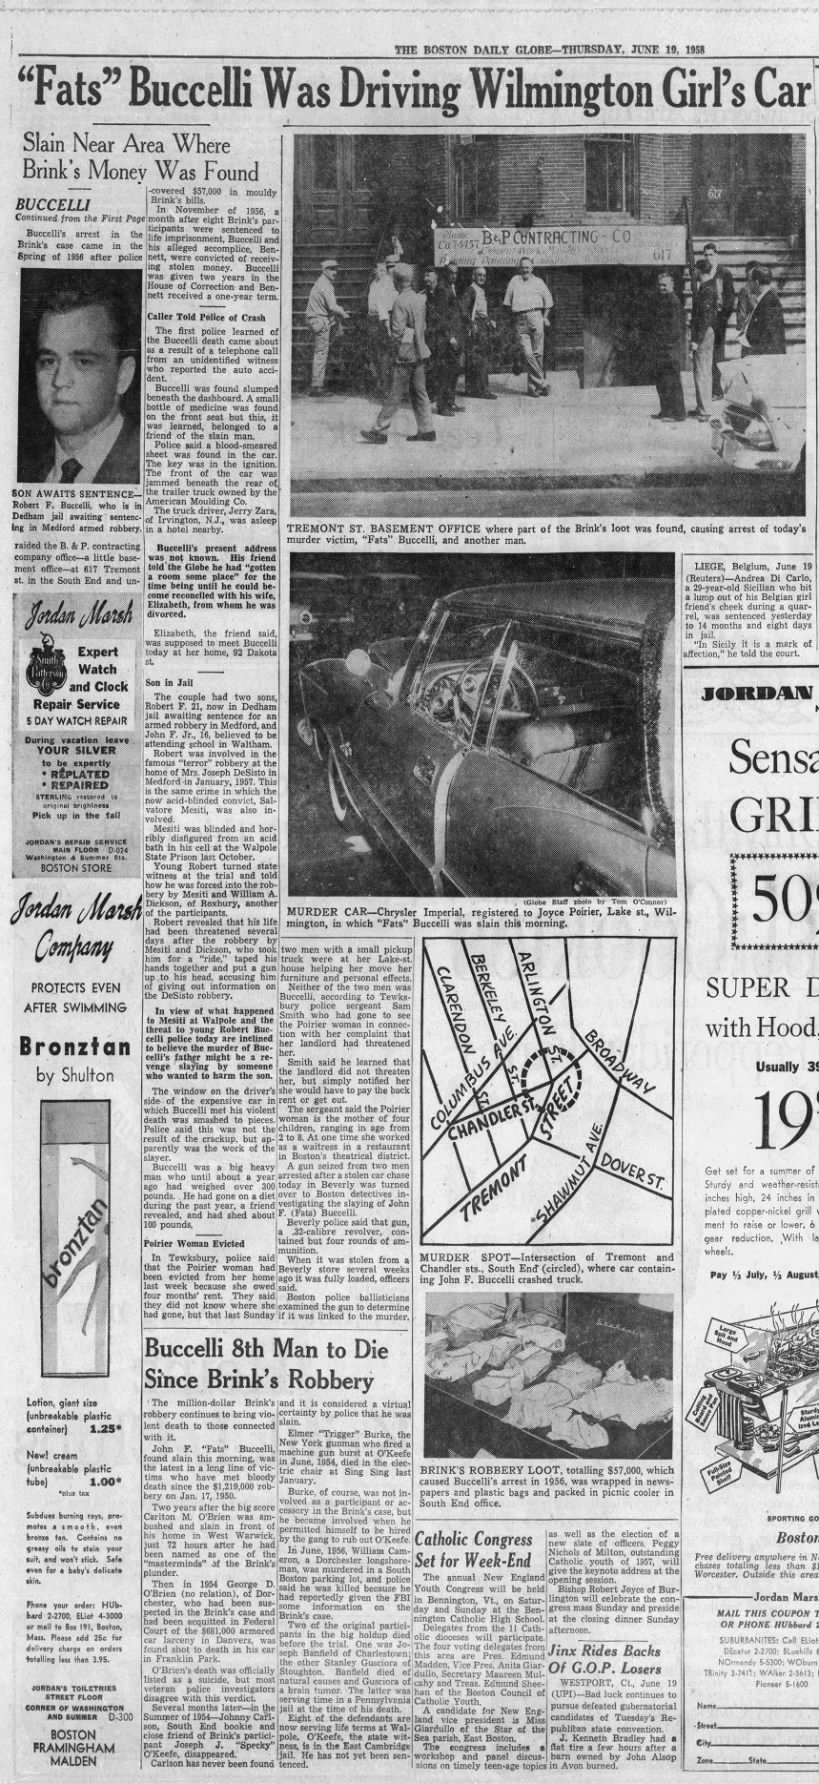 Buccelli Slain Near Area Where Brink's Money was Found (19 June 1958)